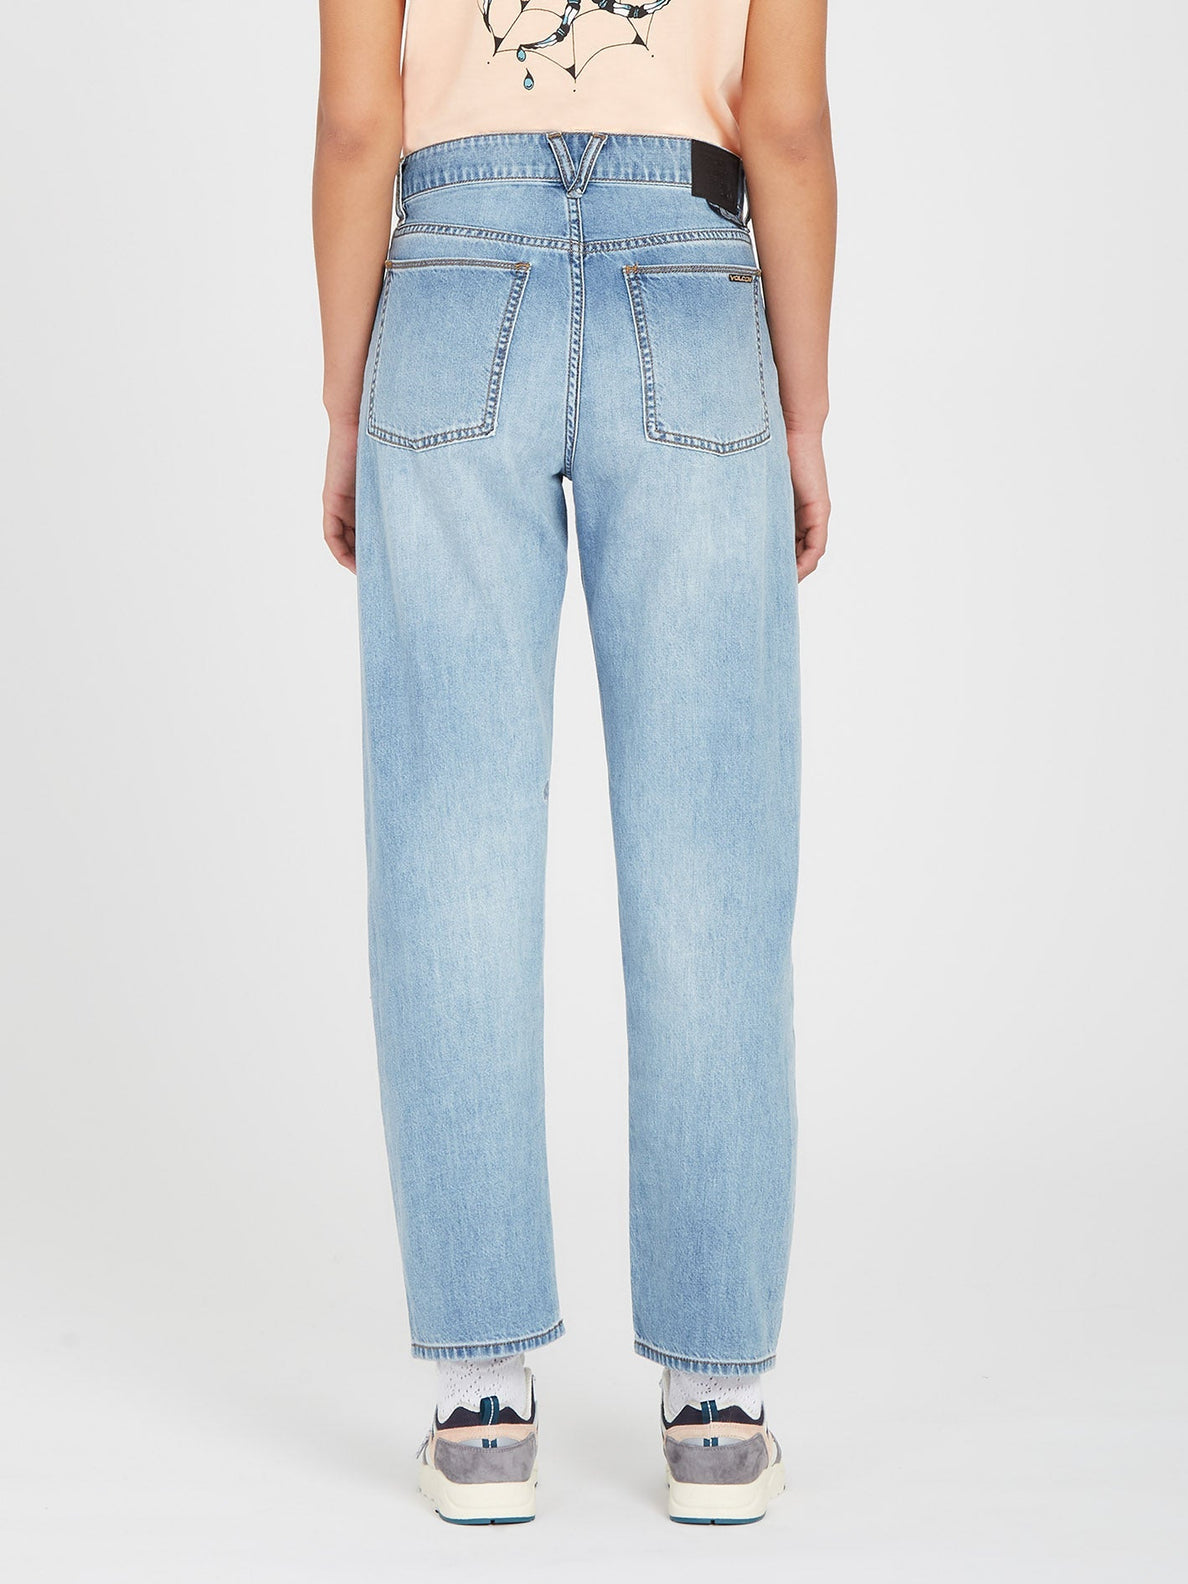 Daddio Jeans - VINTAGE BLUE (B1912302_VBL) [B]